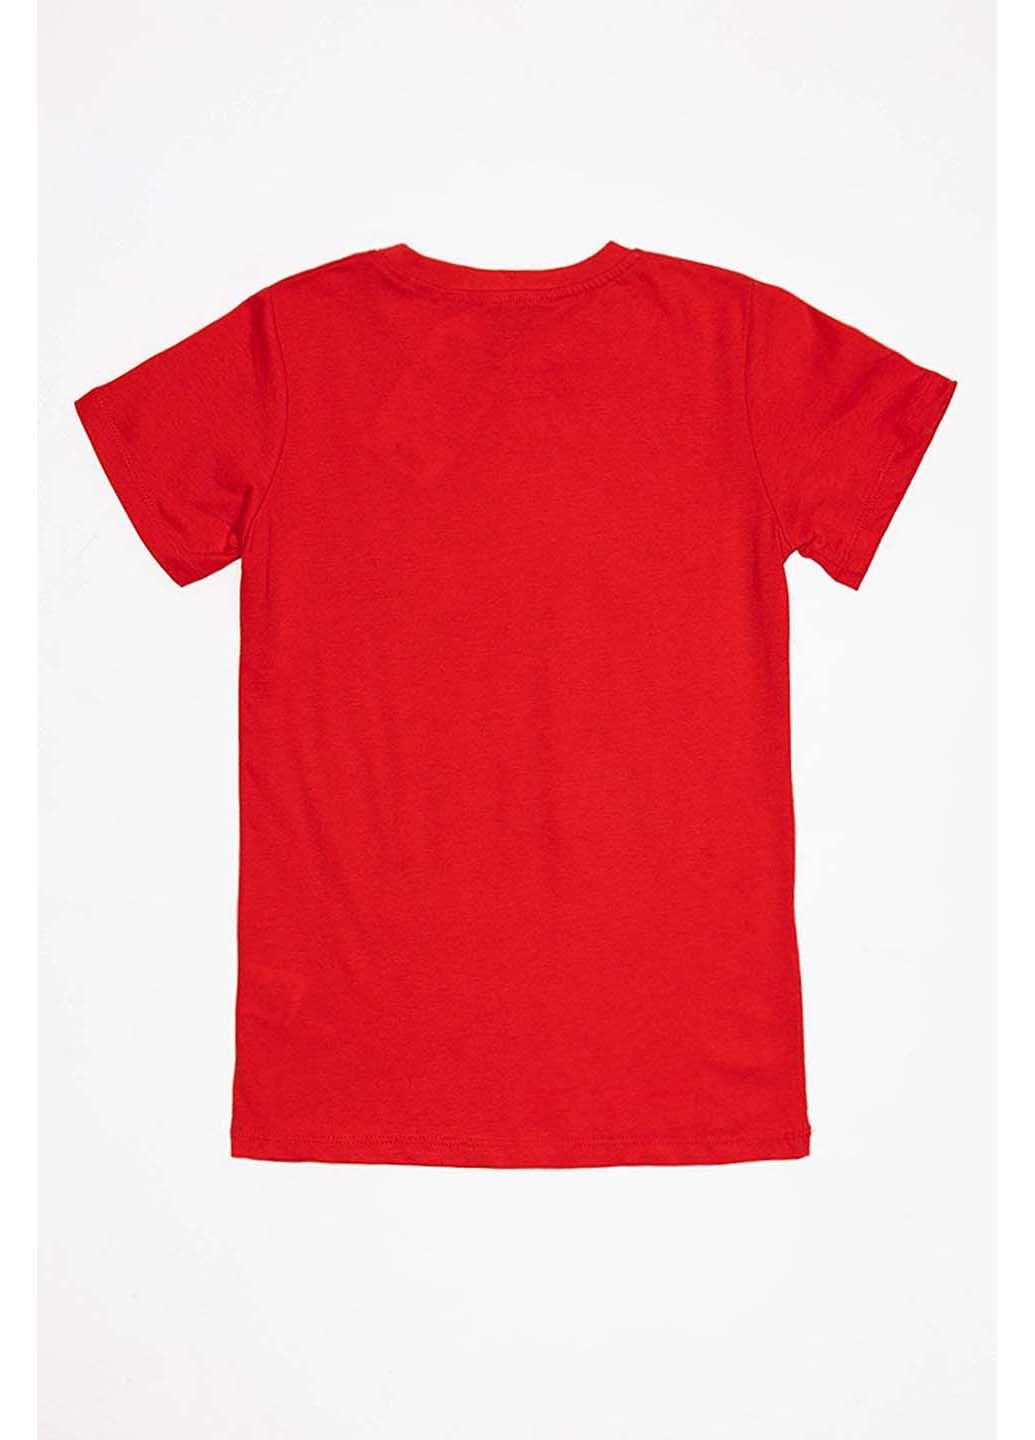 Красная летняя футболка Pengim